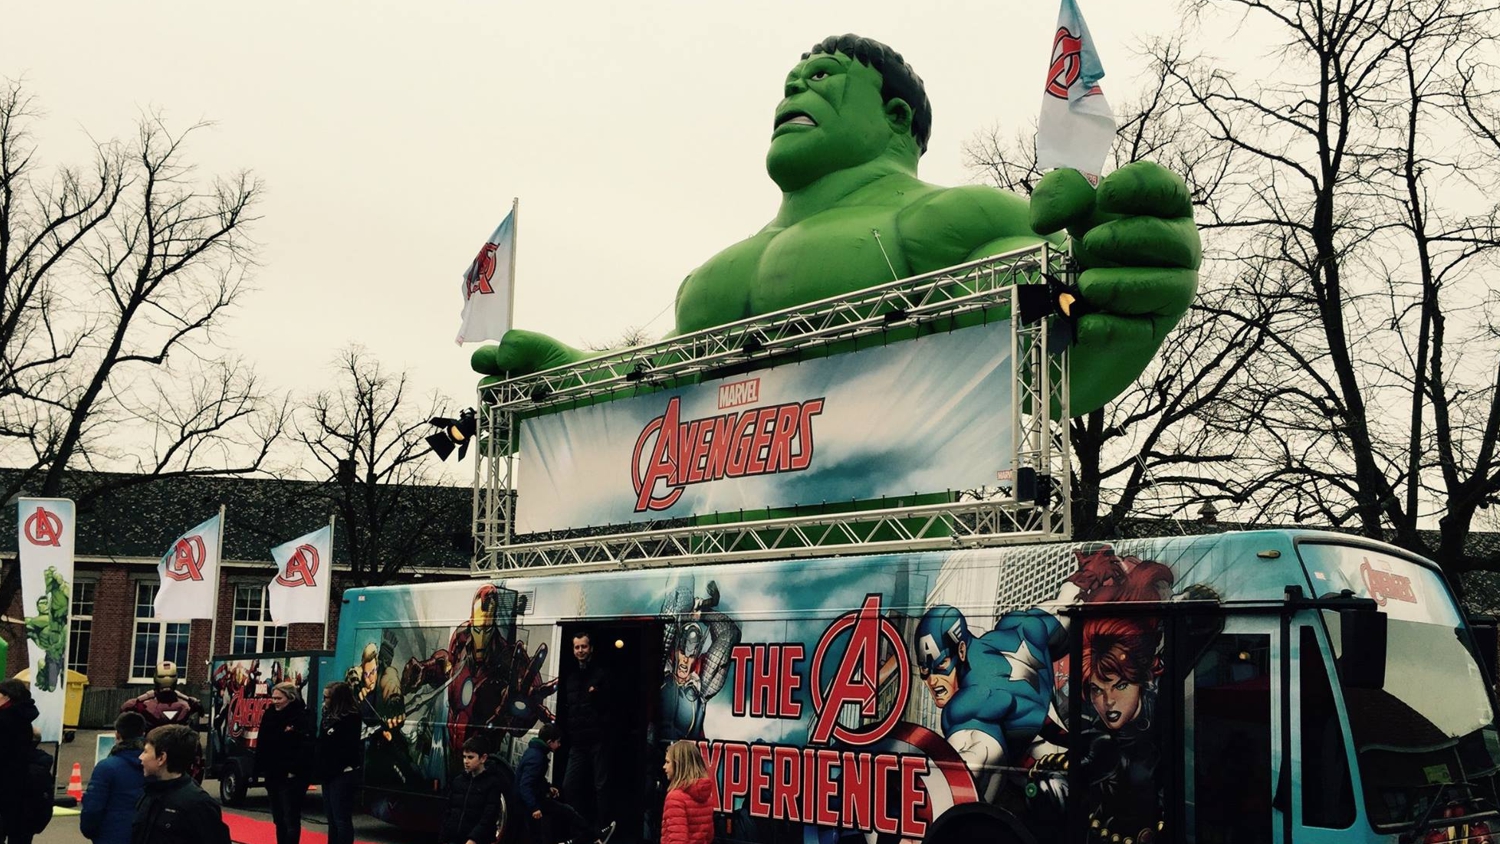 Opblaasbare Hulk inflatable - Marvel Avengers Experience - activatie